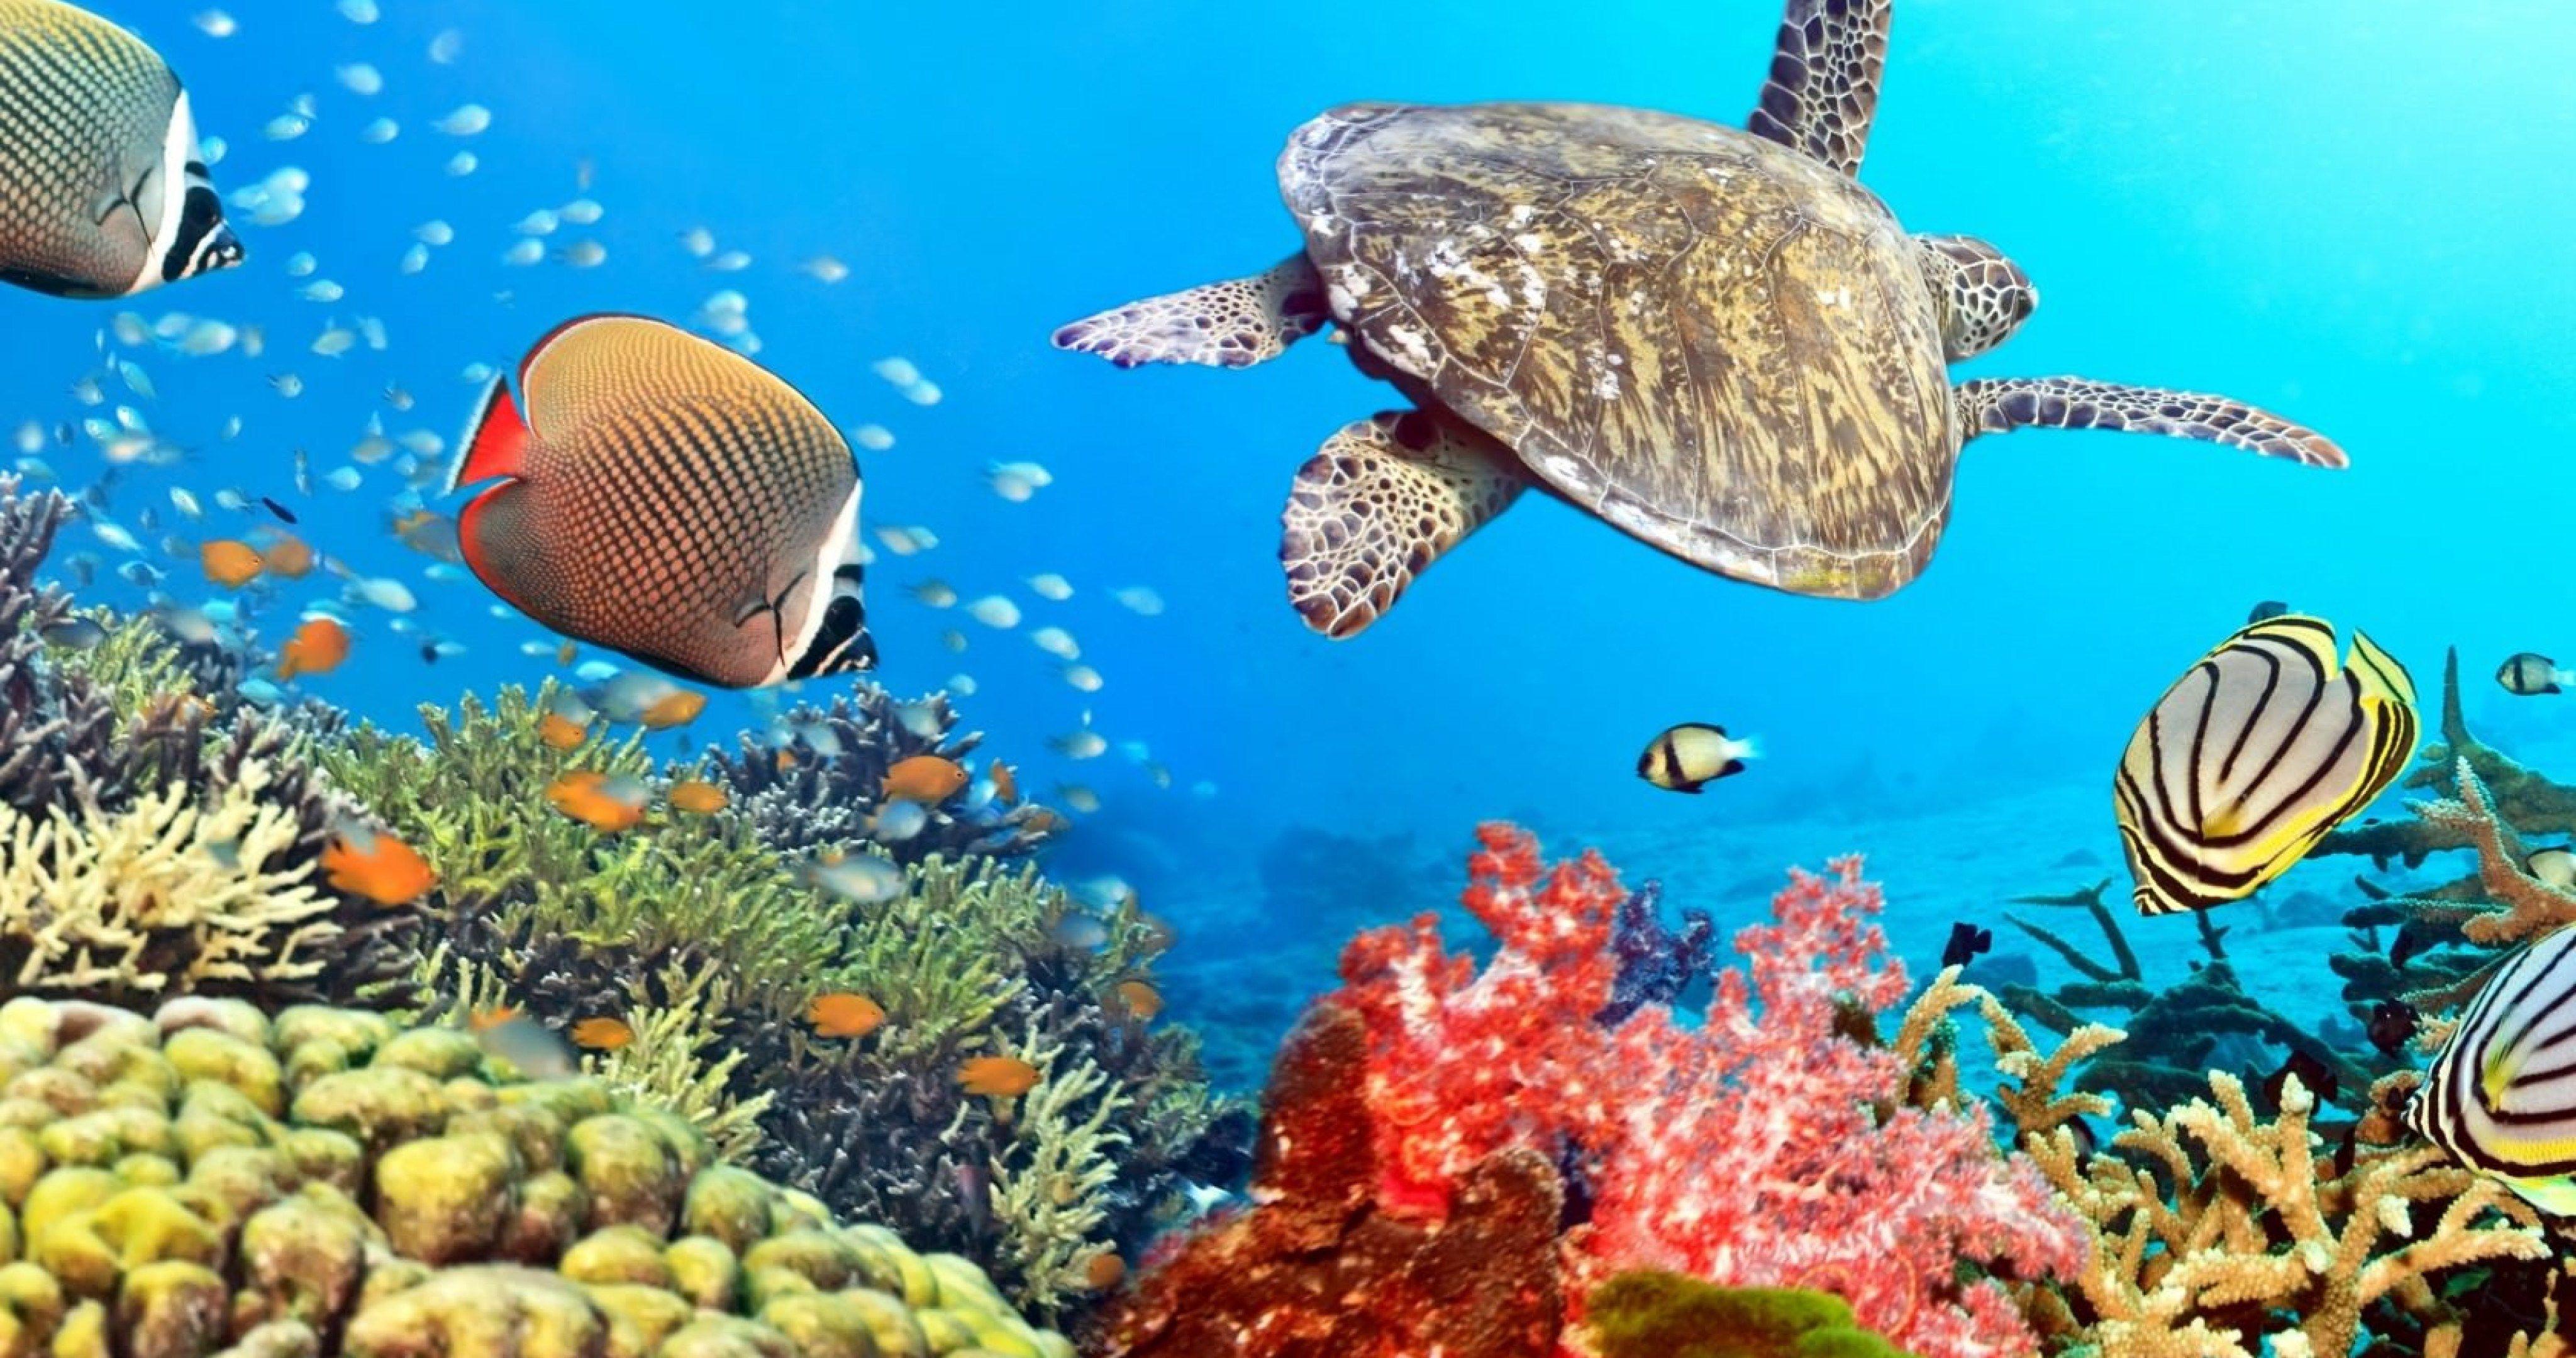 4K Ultra HD Underwater Wallpapers - Top Free 4K Ultra HD Underwater